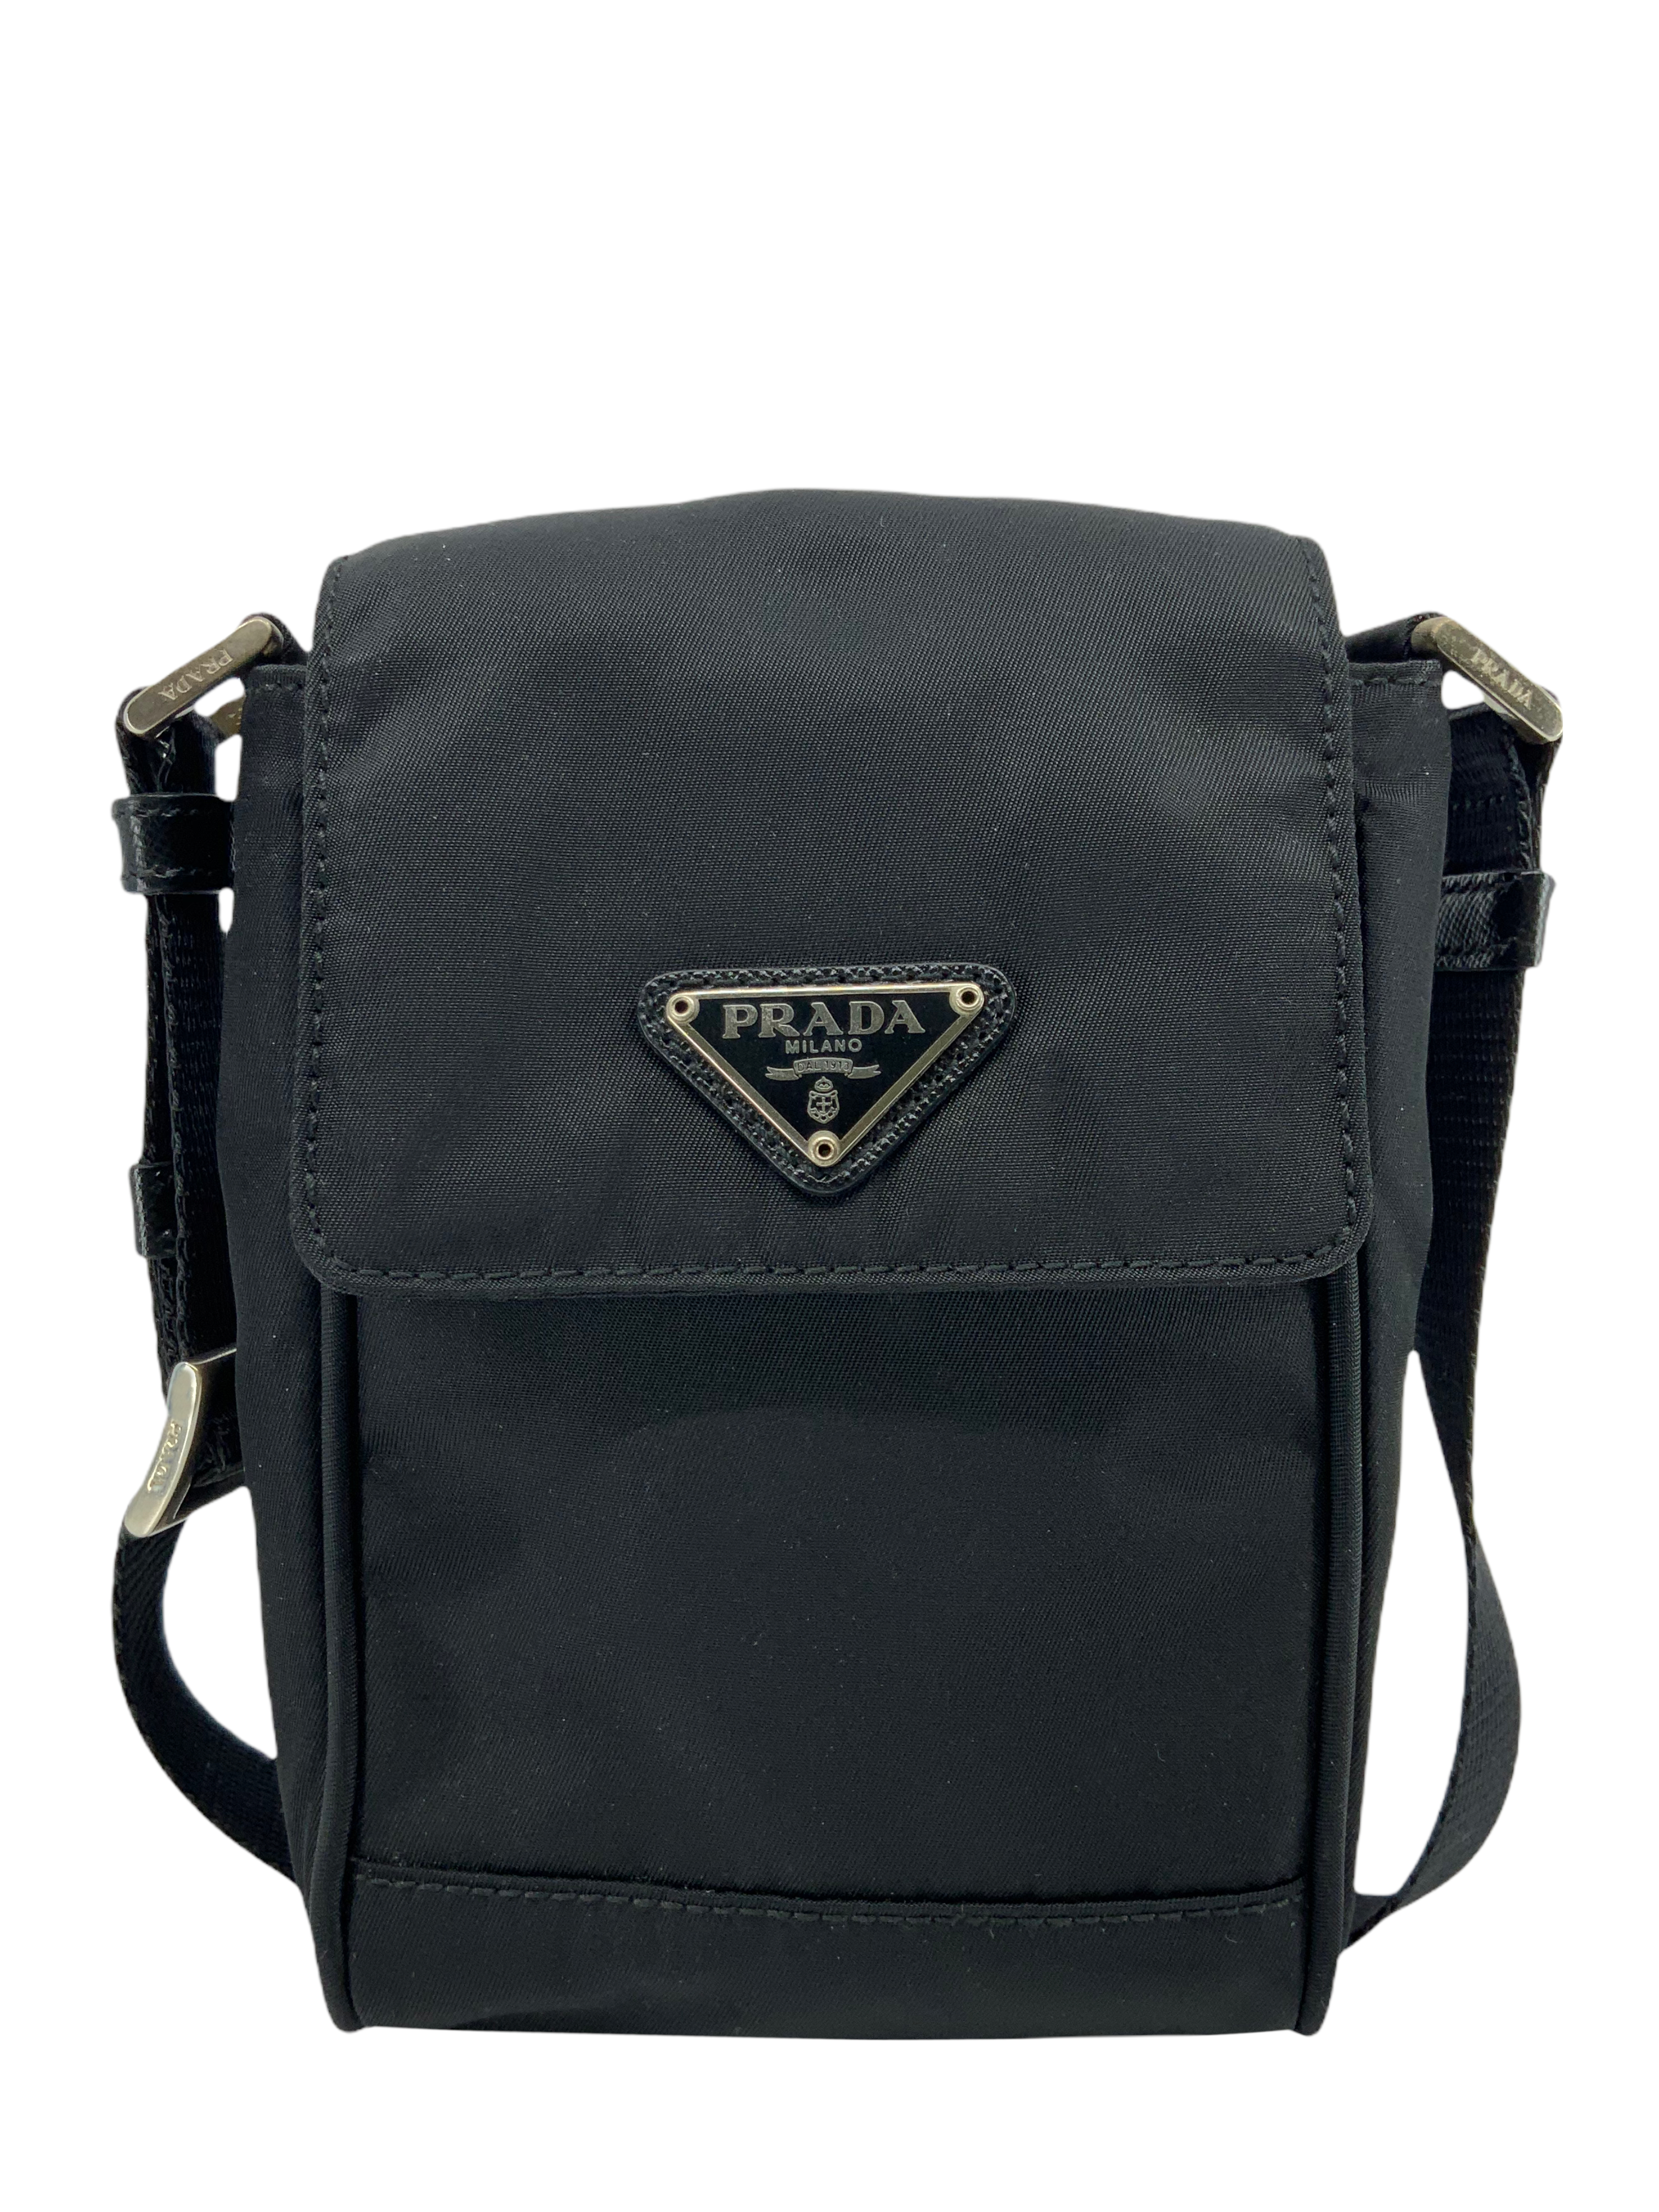 PRADA Nylon Crossbody Bags for Women, Authenticity Guaranteed